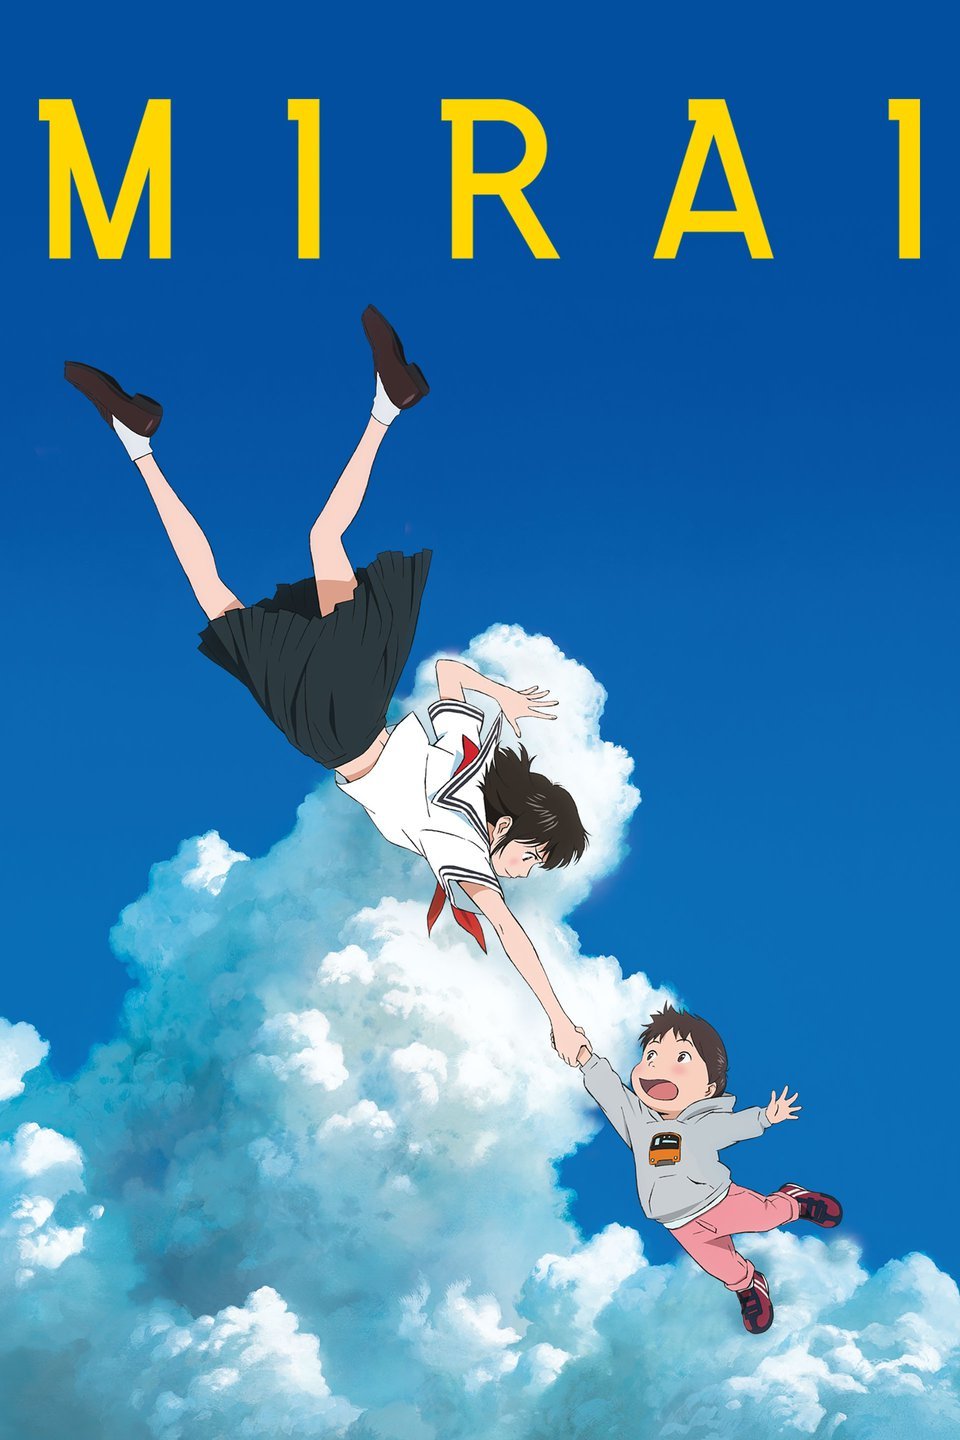 [MINI Super-HQ] Mirai (2018) มิไร มหัศจรรย์วันสองวัย [1080p] [พากย์ไทย 5.1 + เสียงญี่ปุ่น DTS] [บรรยายไทย + อังกฤษ] [เสียงไทย + ซับไทย] [OPENLOAD]